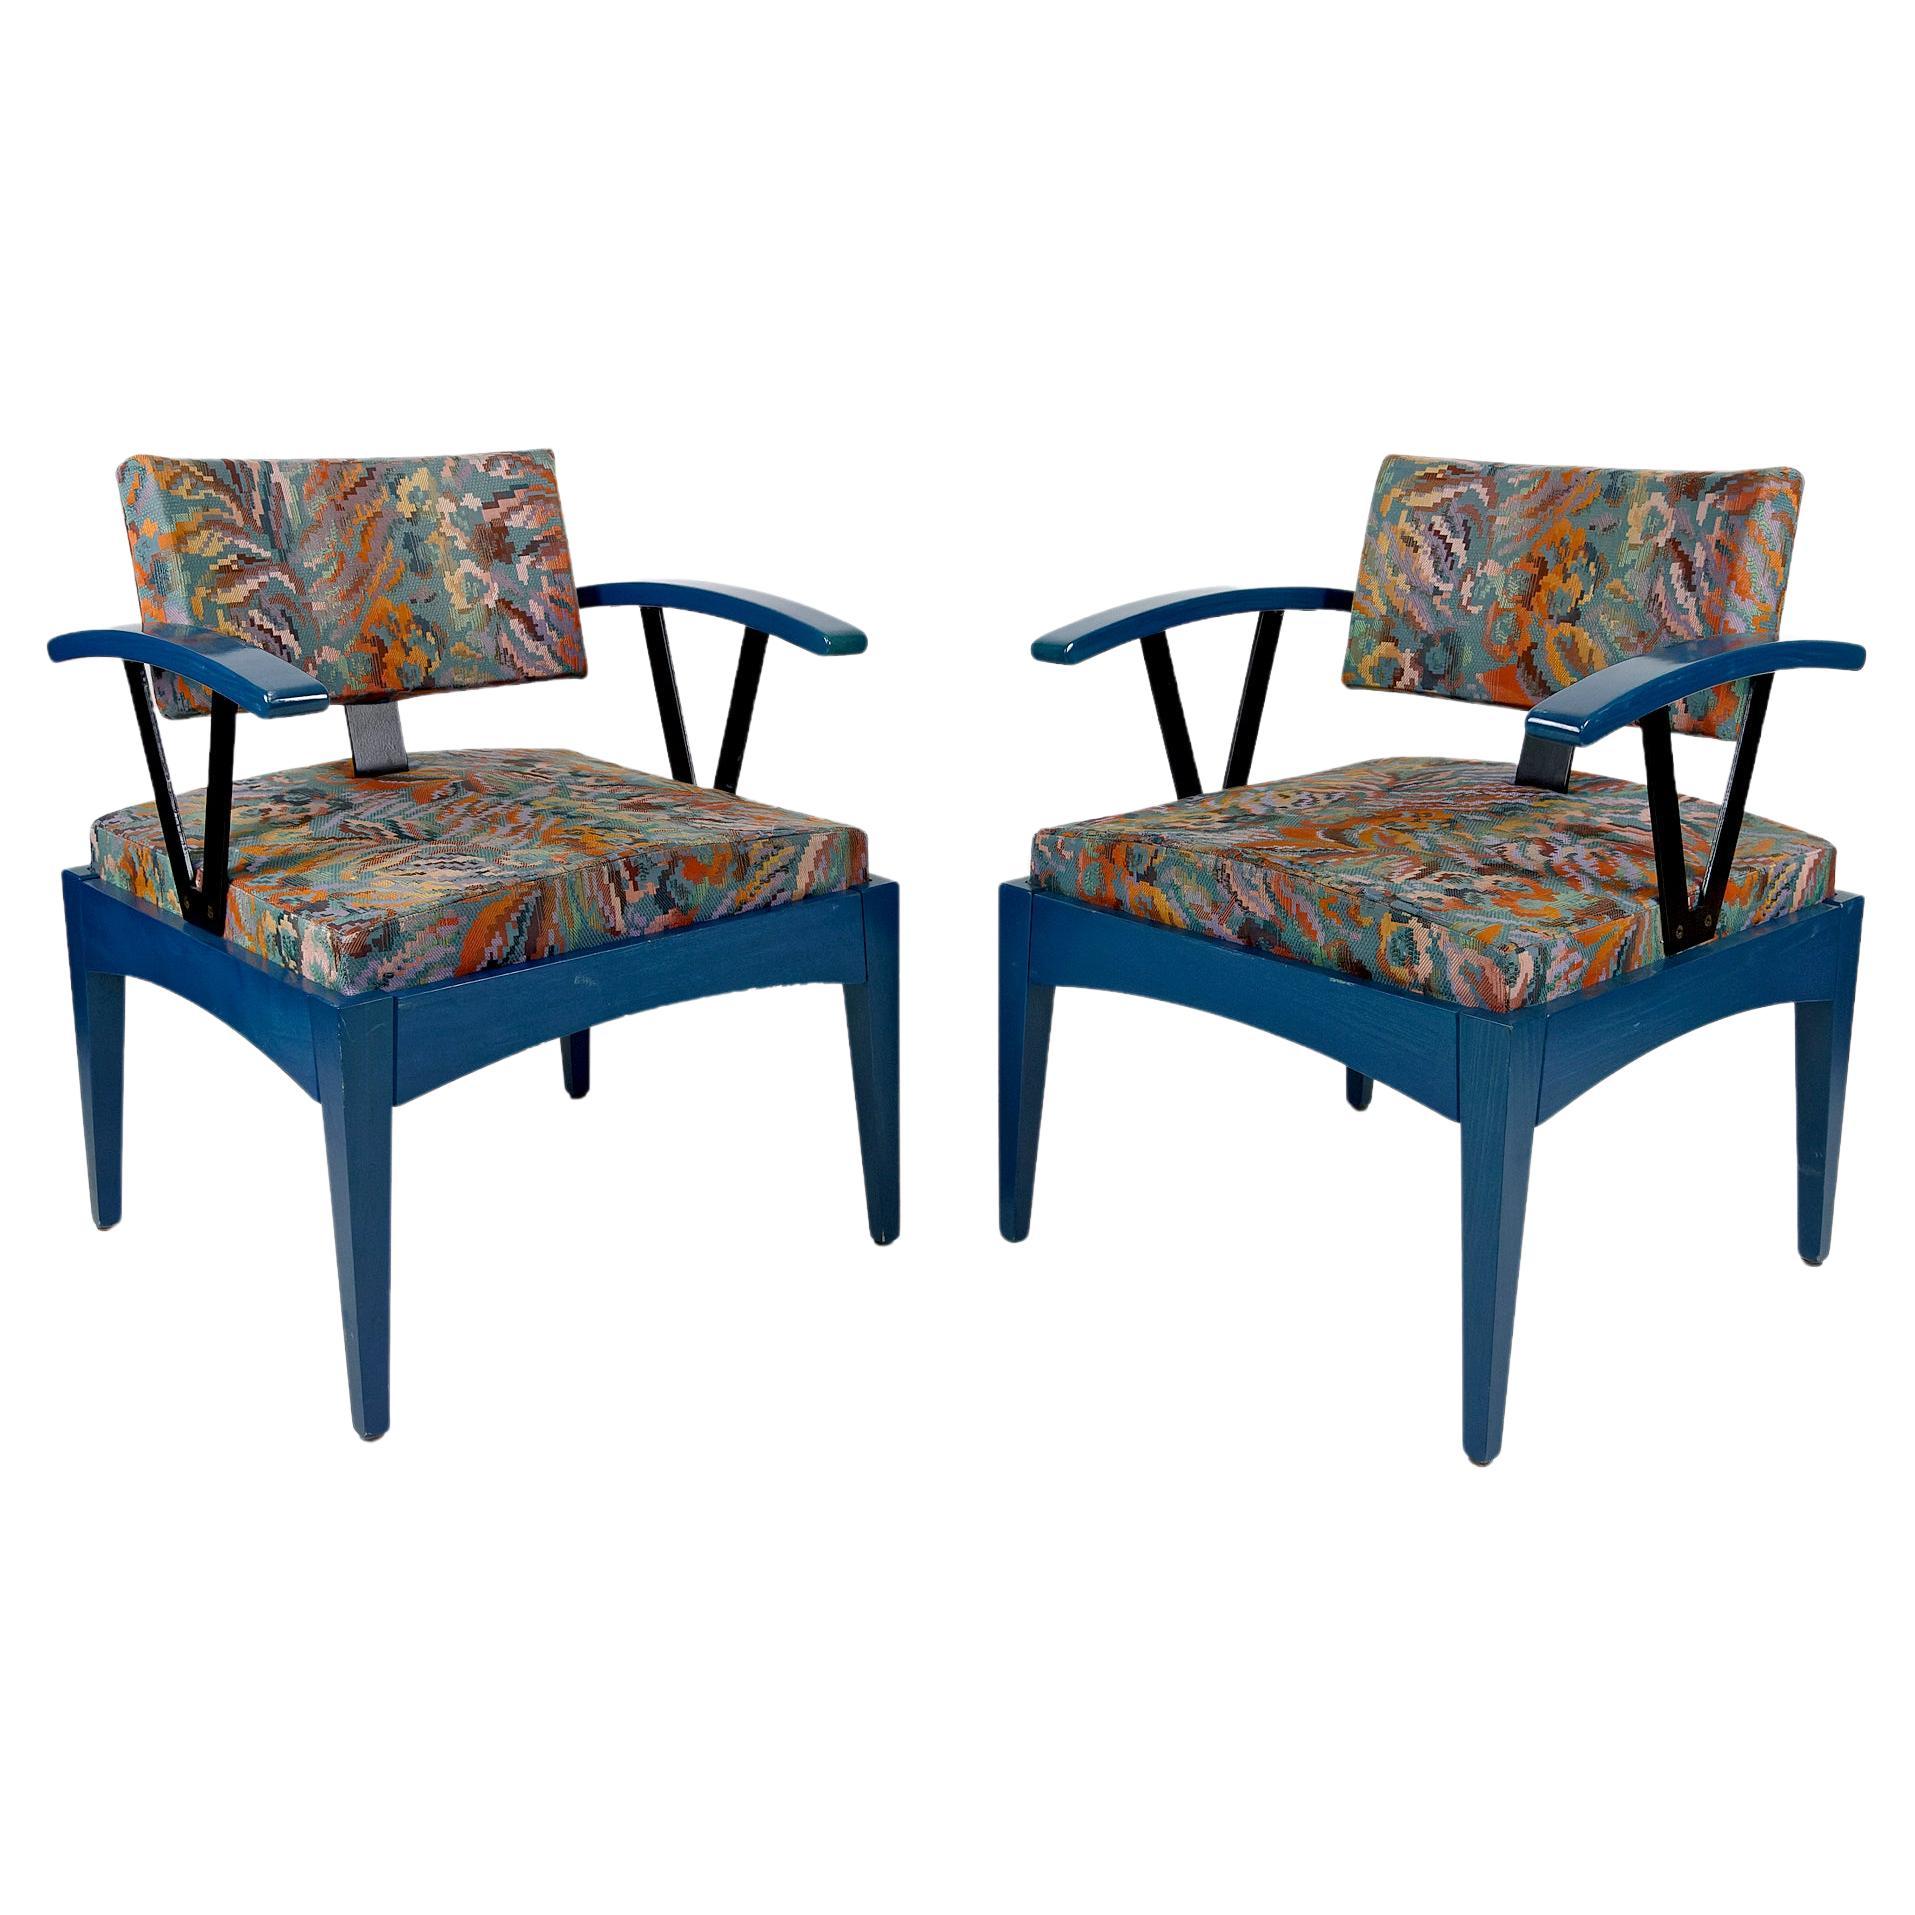 Pair of modernist Baumann armchairs, France, 1970s/80s